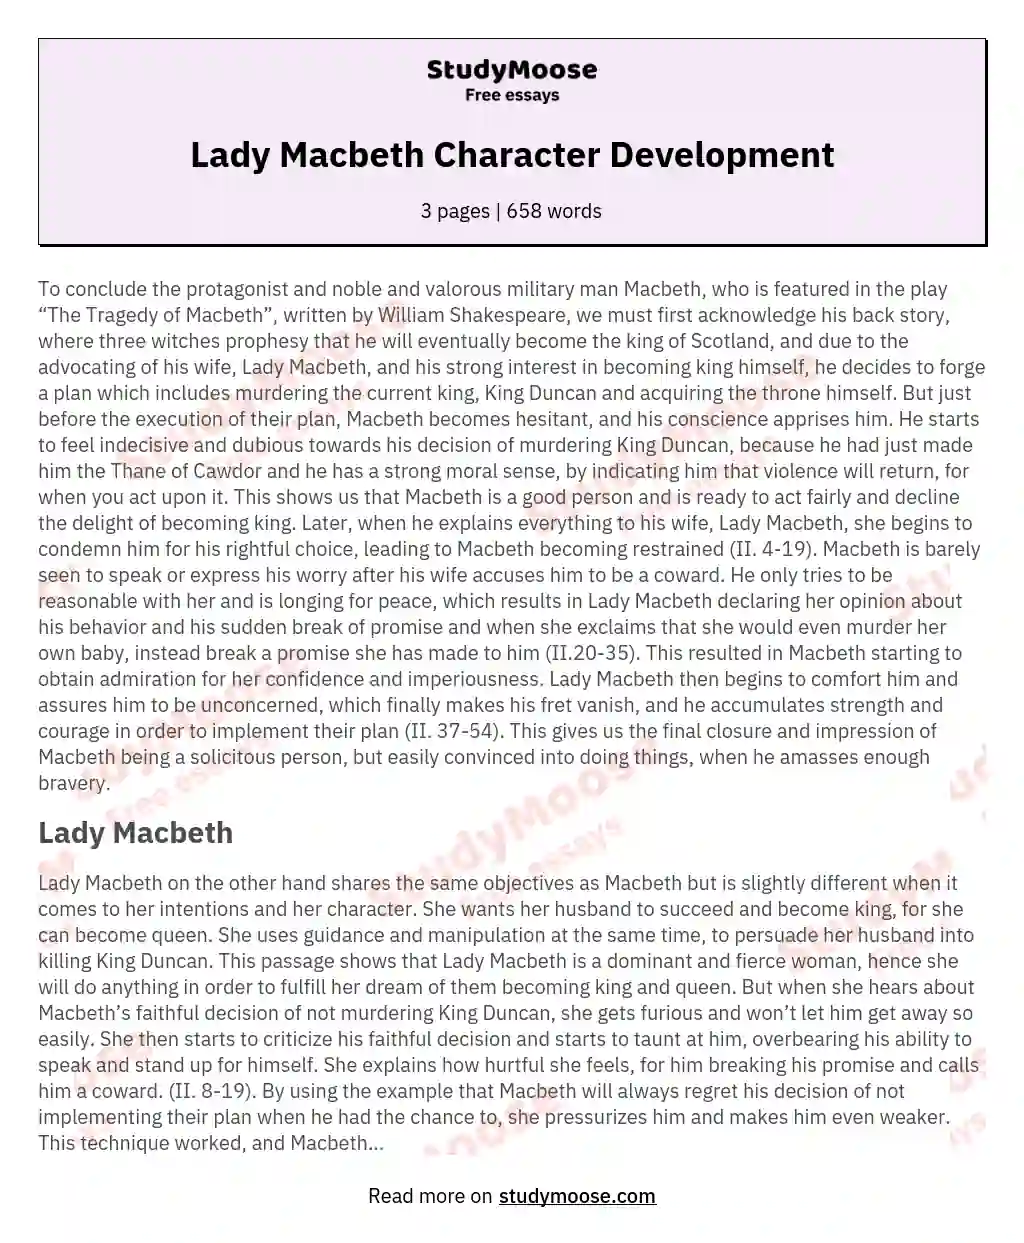 Lady Macbeth Character Development